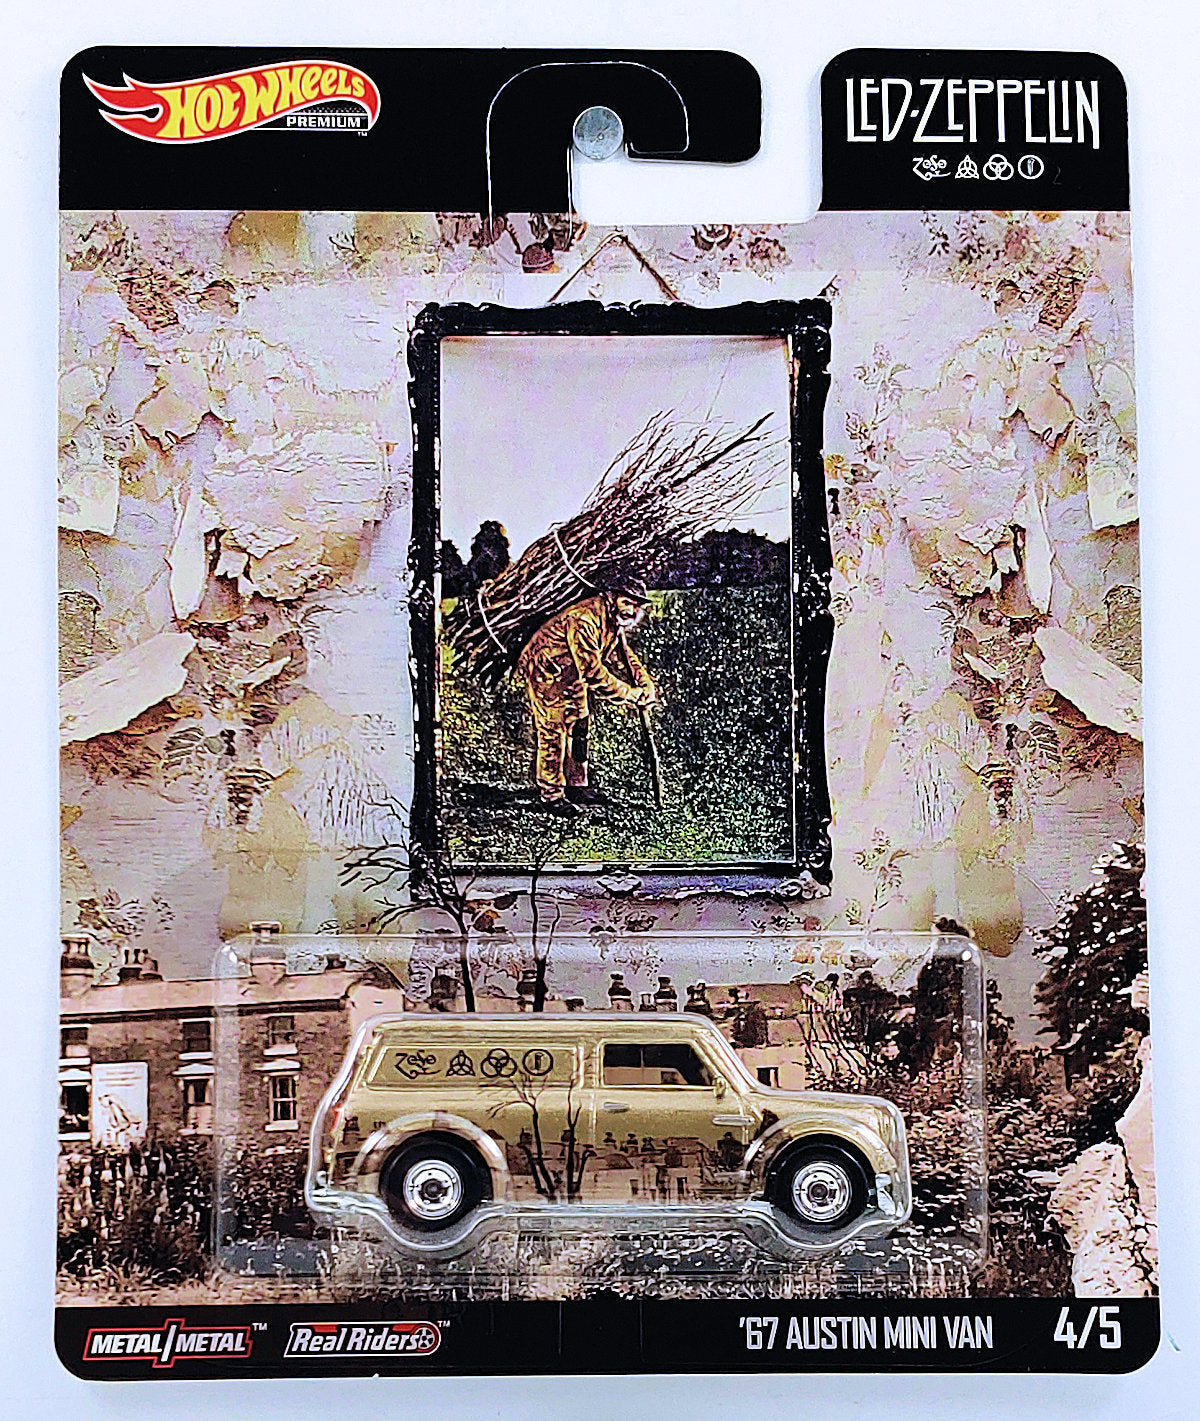 Hot Wheels 2020 - Pop Culture / Led Zeppelin 4/5 - '67 Austin Mini Van - Gold / Led Zeppelin IV